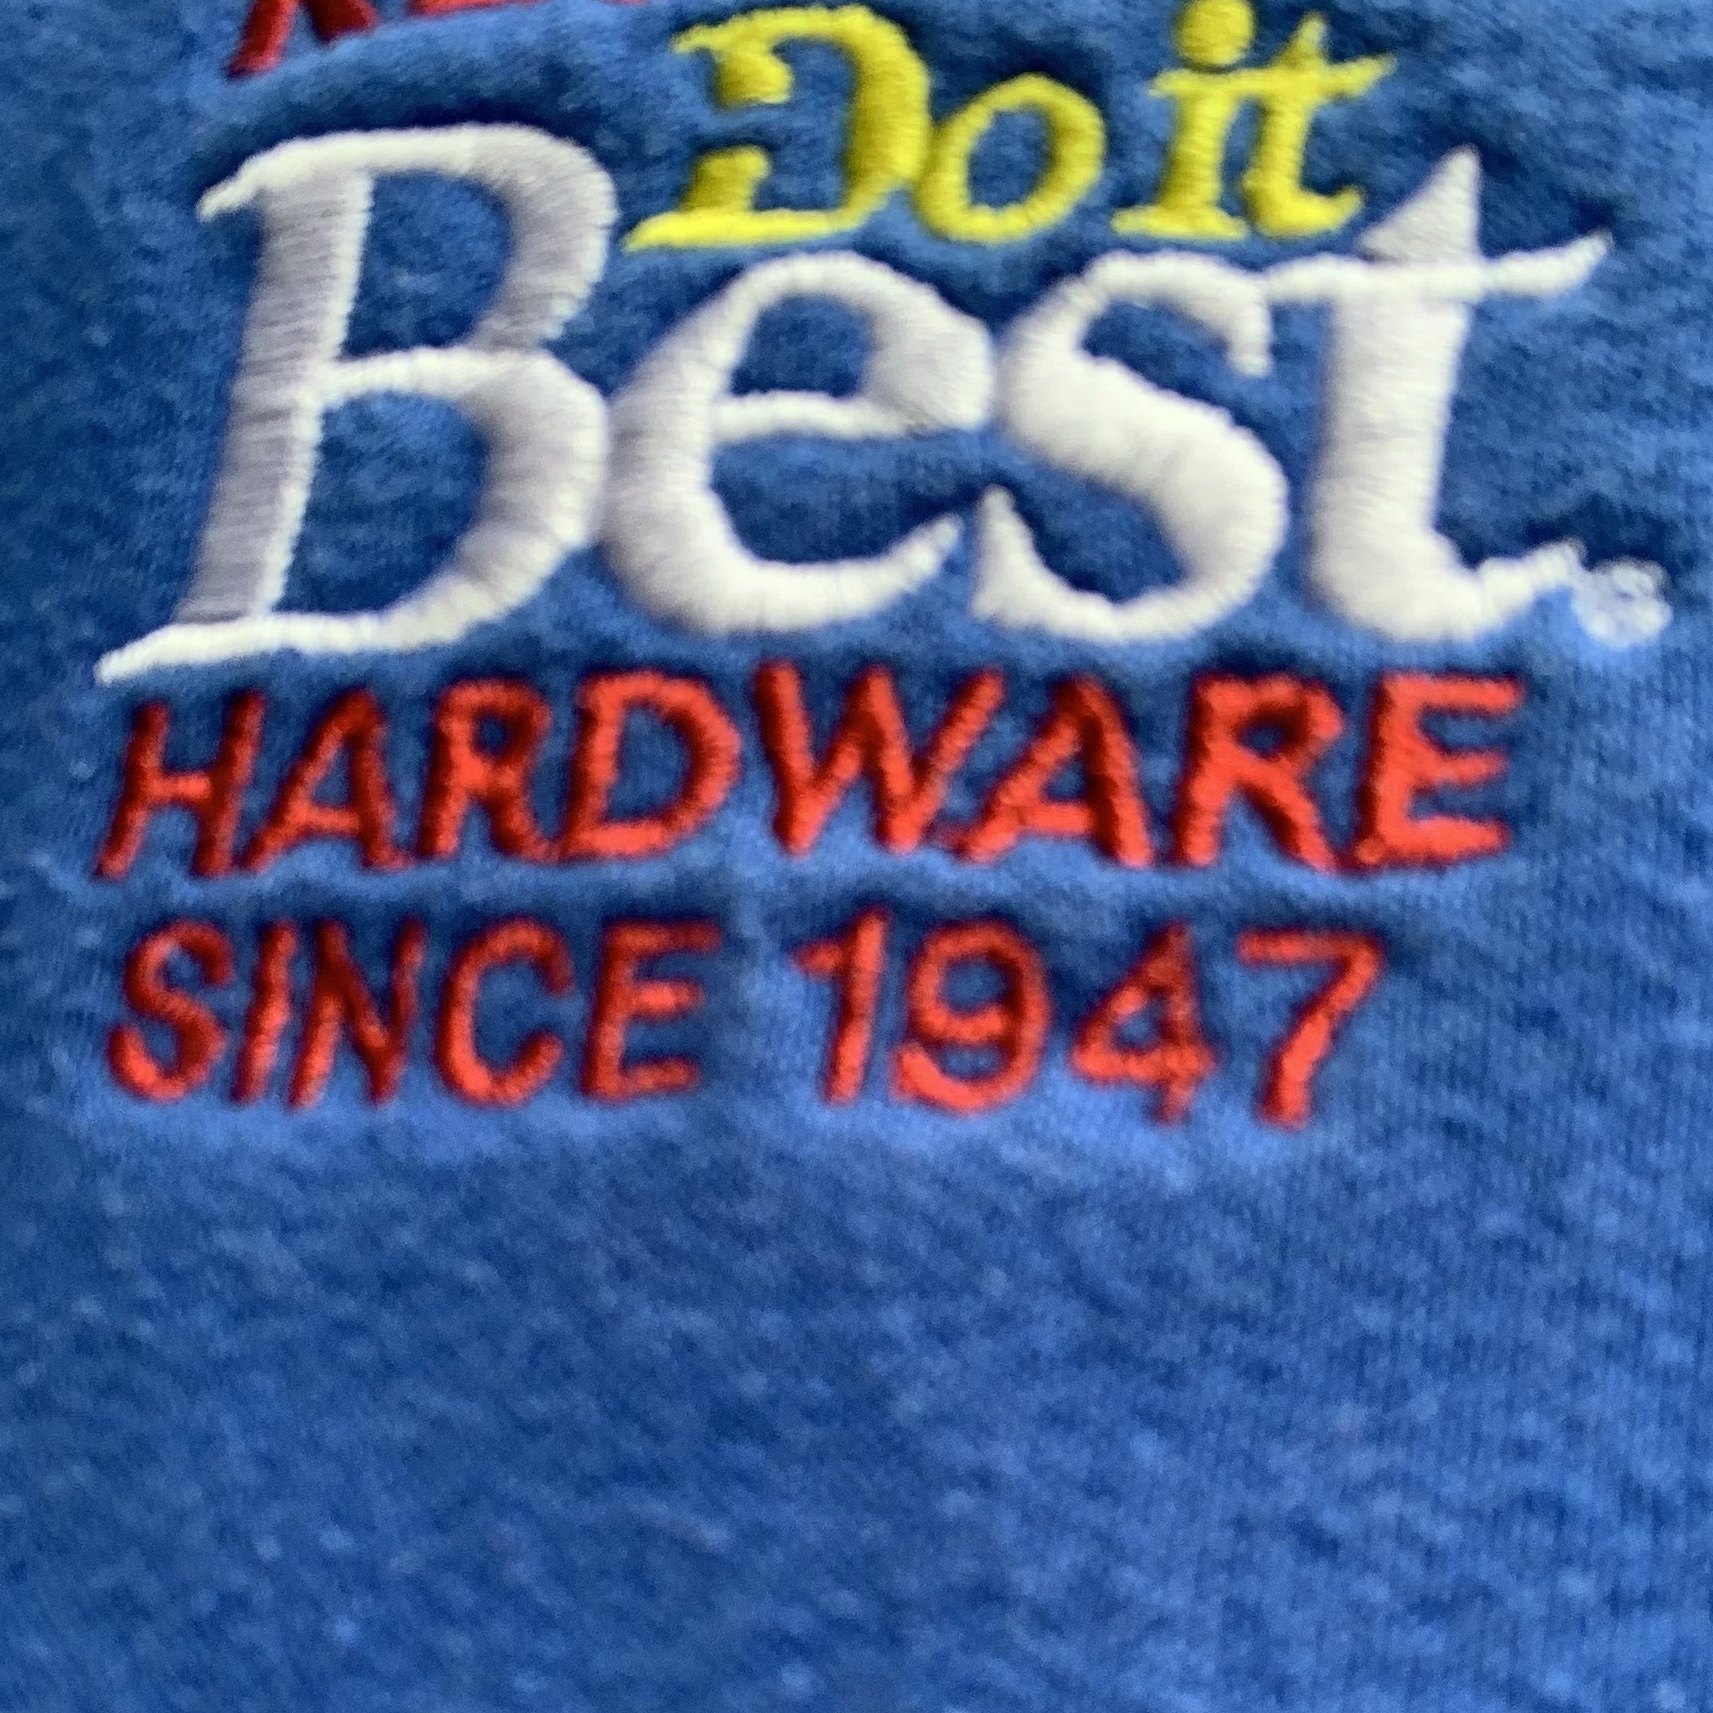 Do it Best hardware store branding